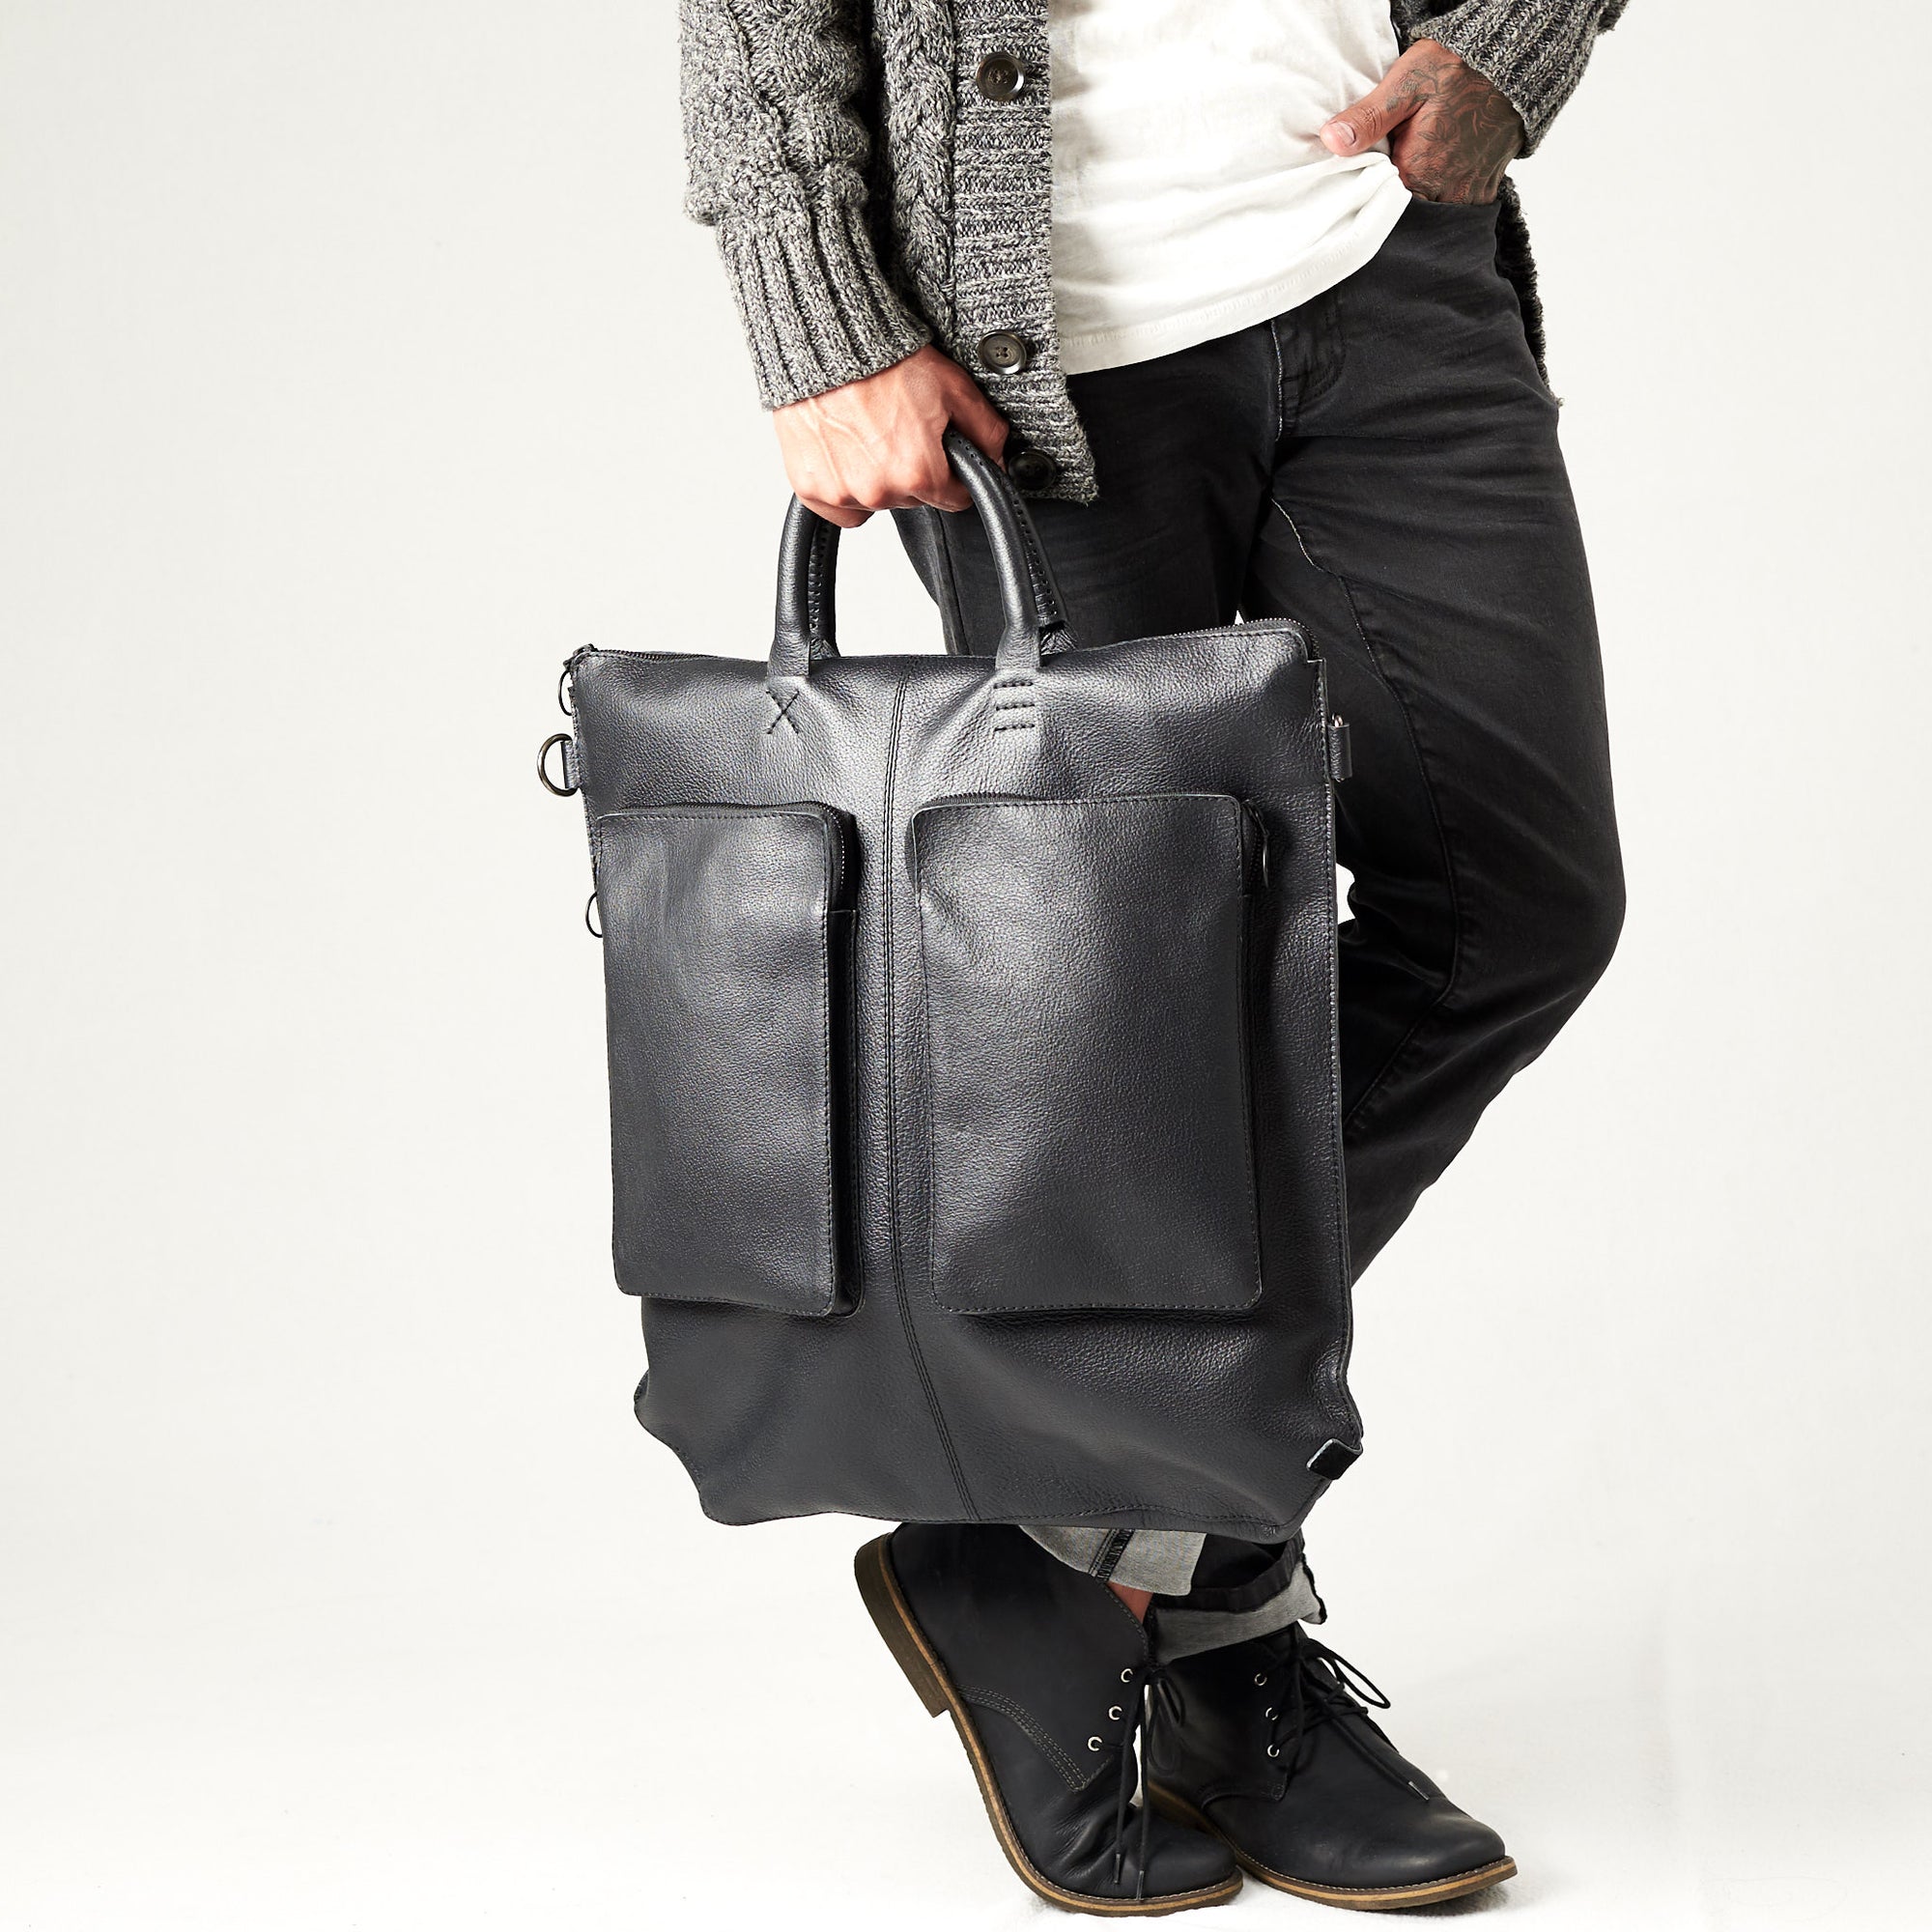 Style cylinder handles. Black tote zipper bag by Capra Leather. Handmade men work bag.